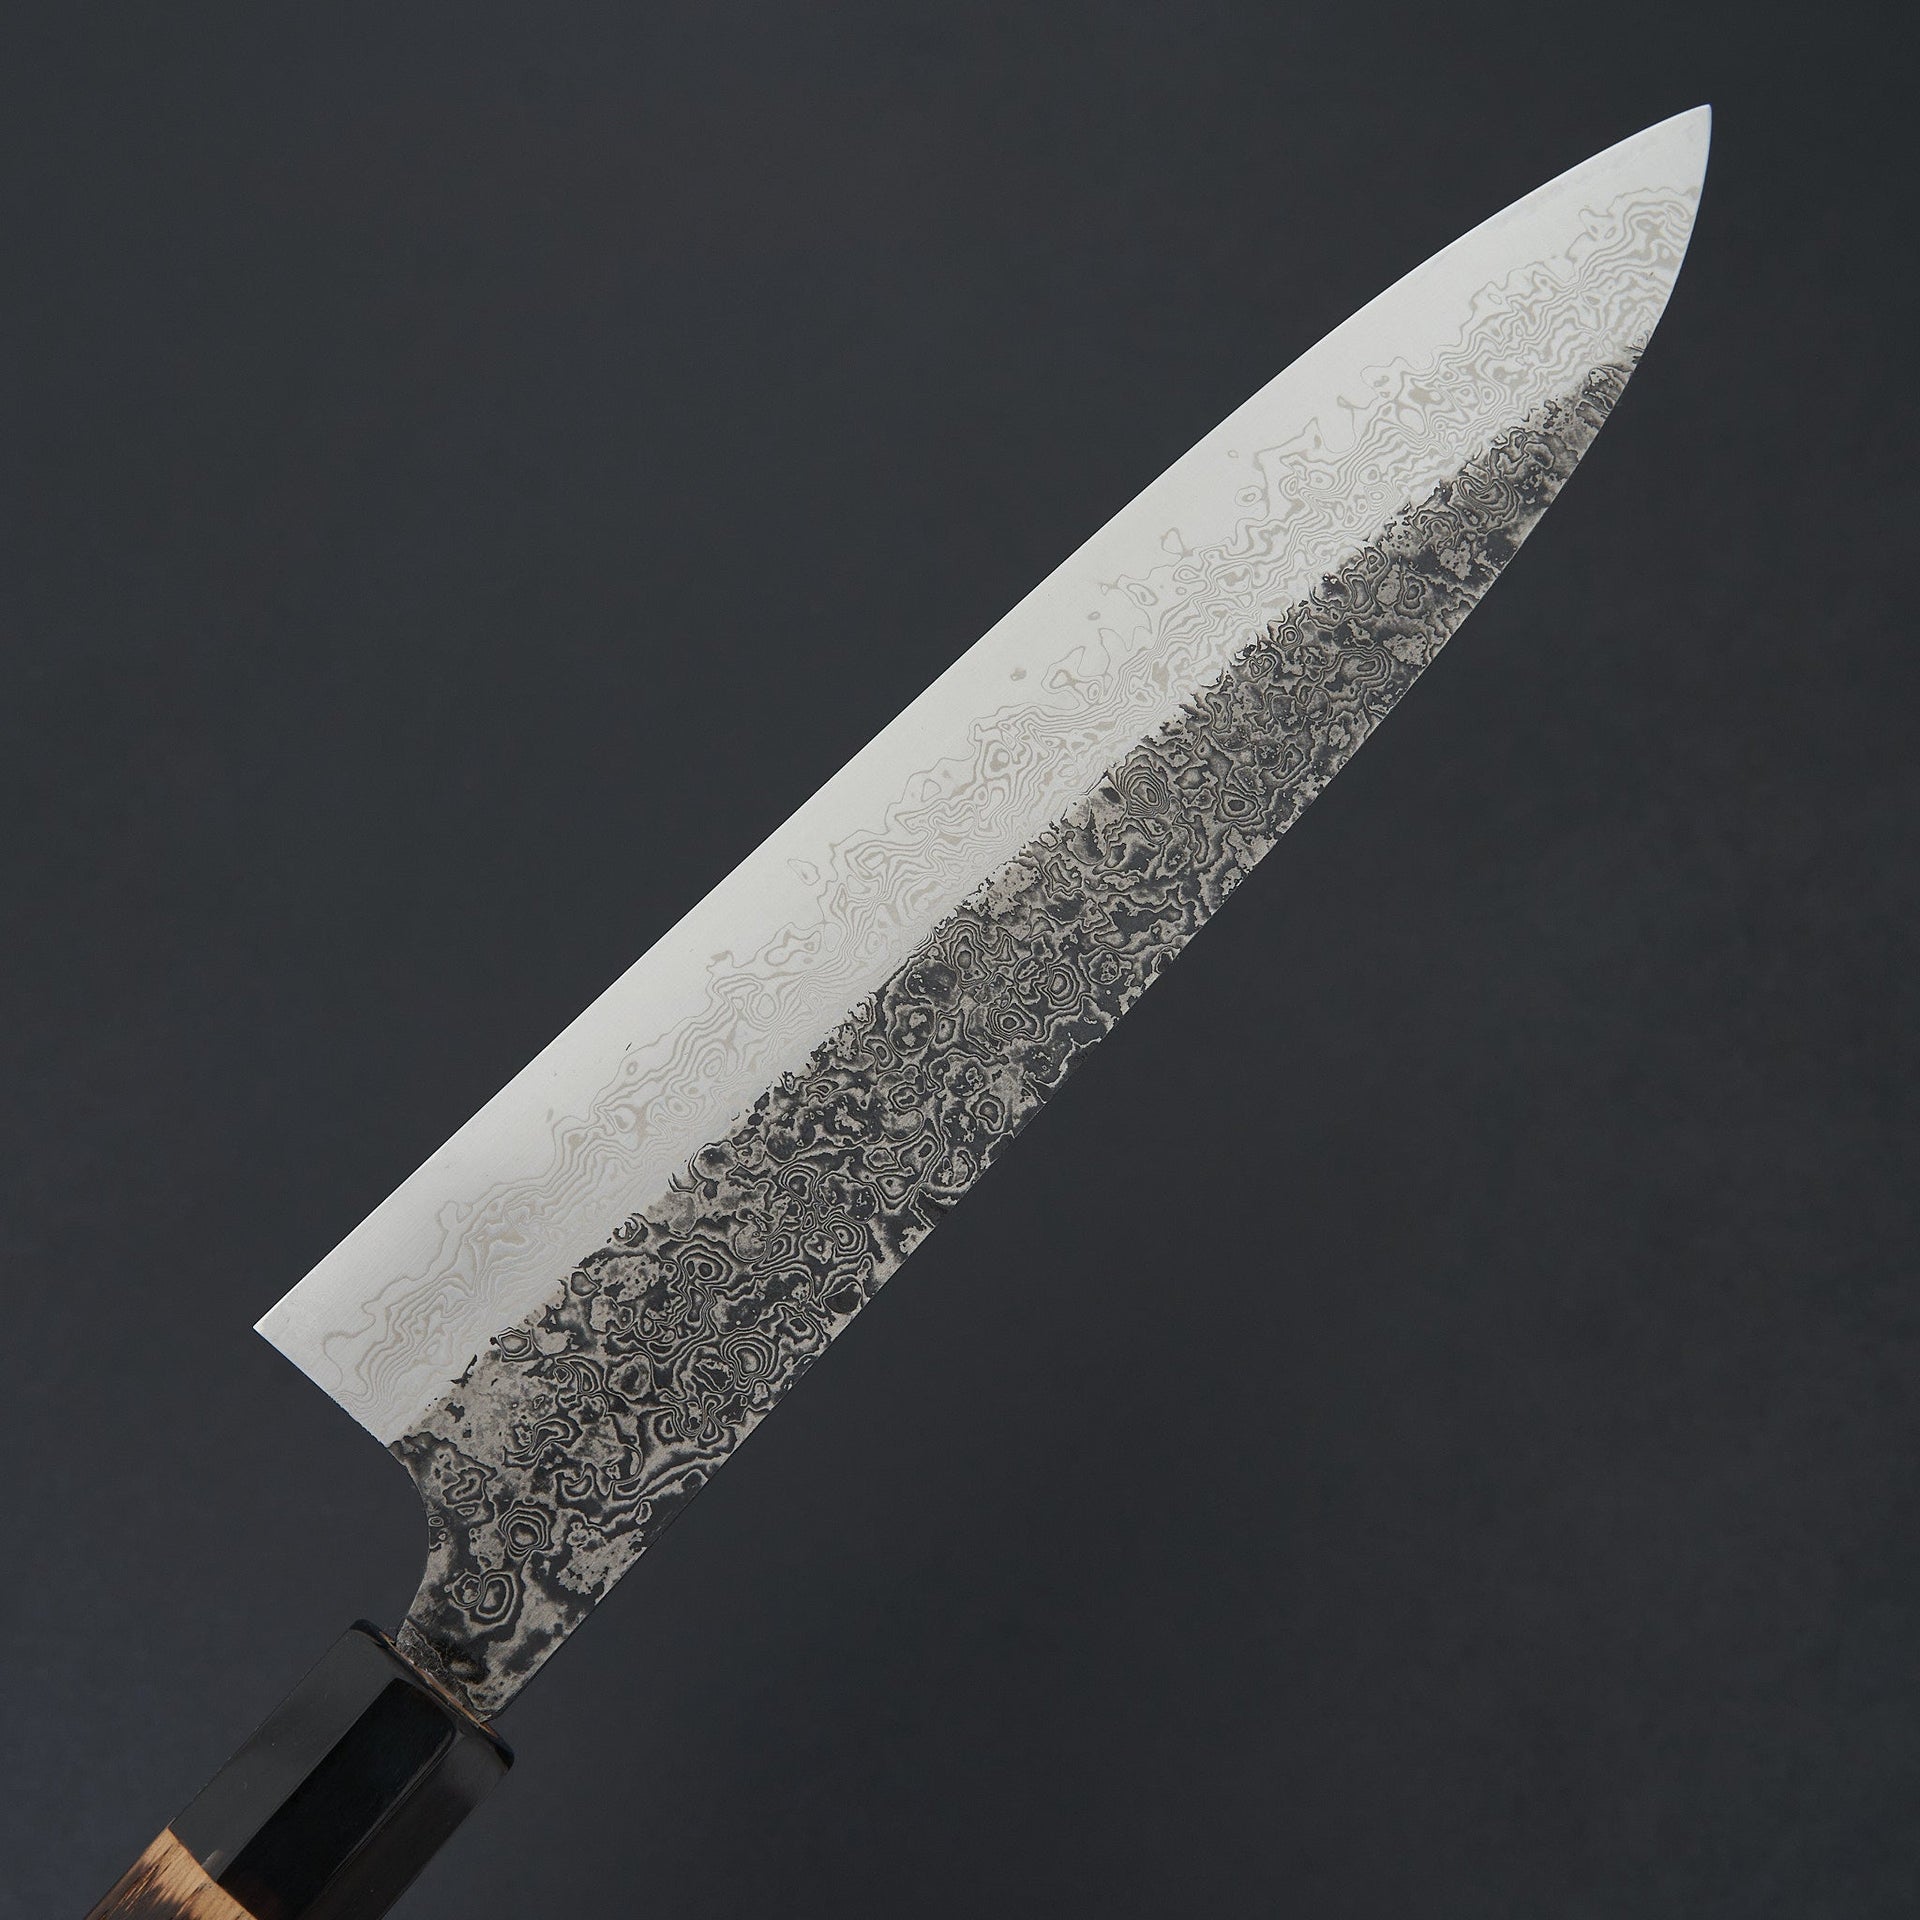 Yoshikane SLD Black Damascus Gyuto 240mm-Knife-Yoshikane-Carbon Knife Co